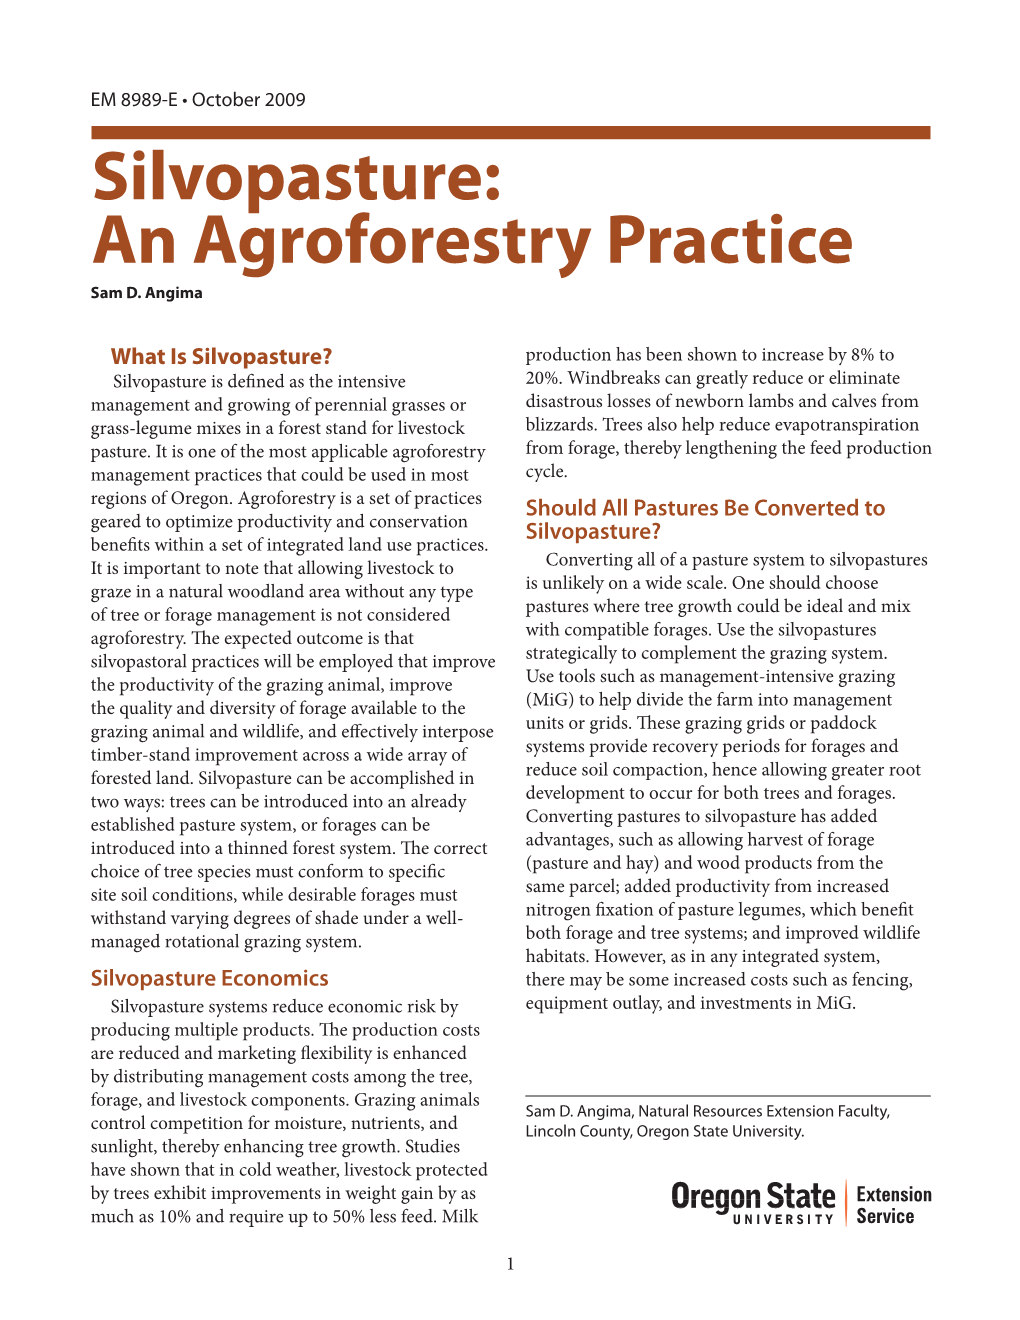 Silvopasture: an Agroforestry Practice Sam D